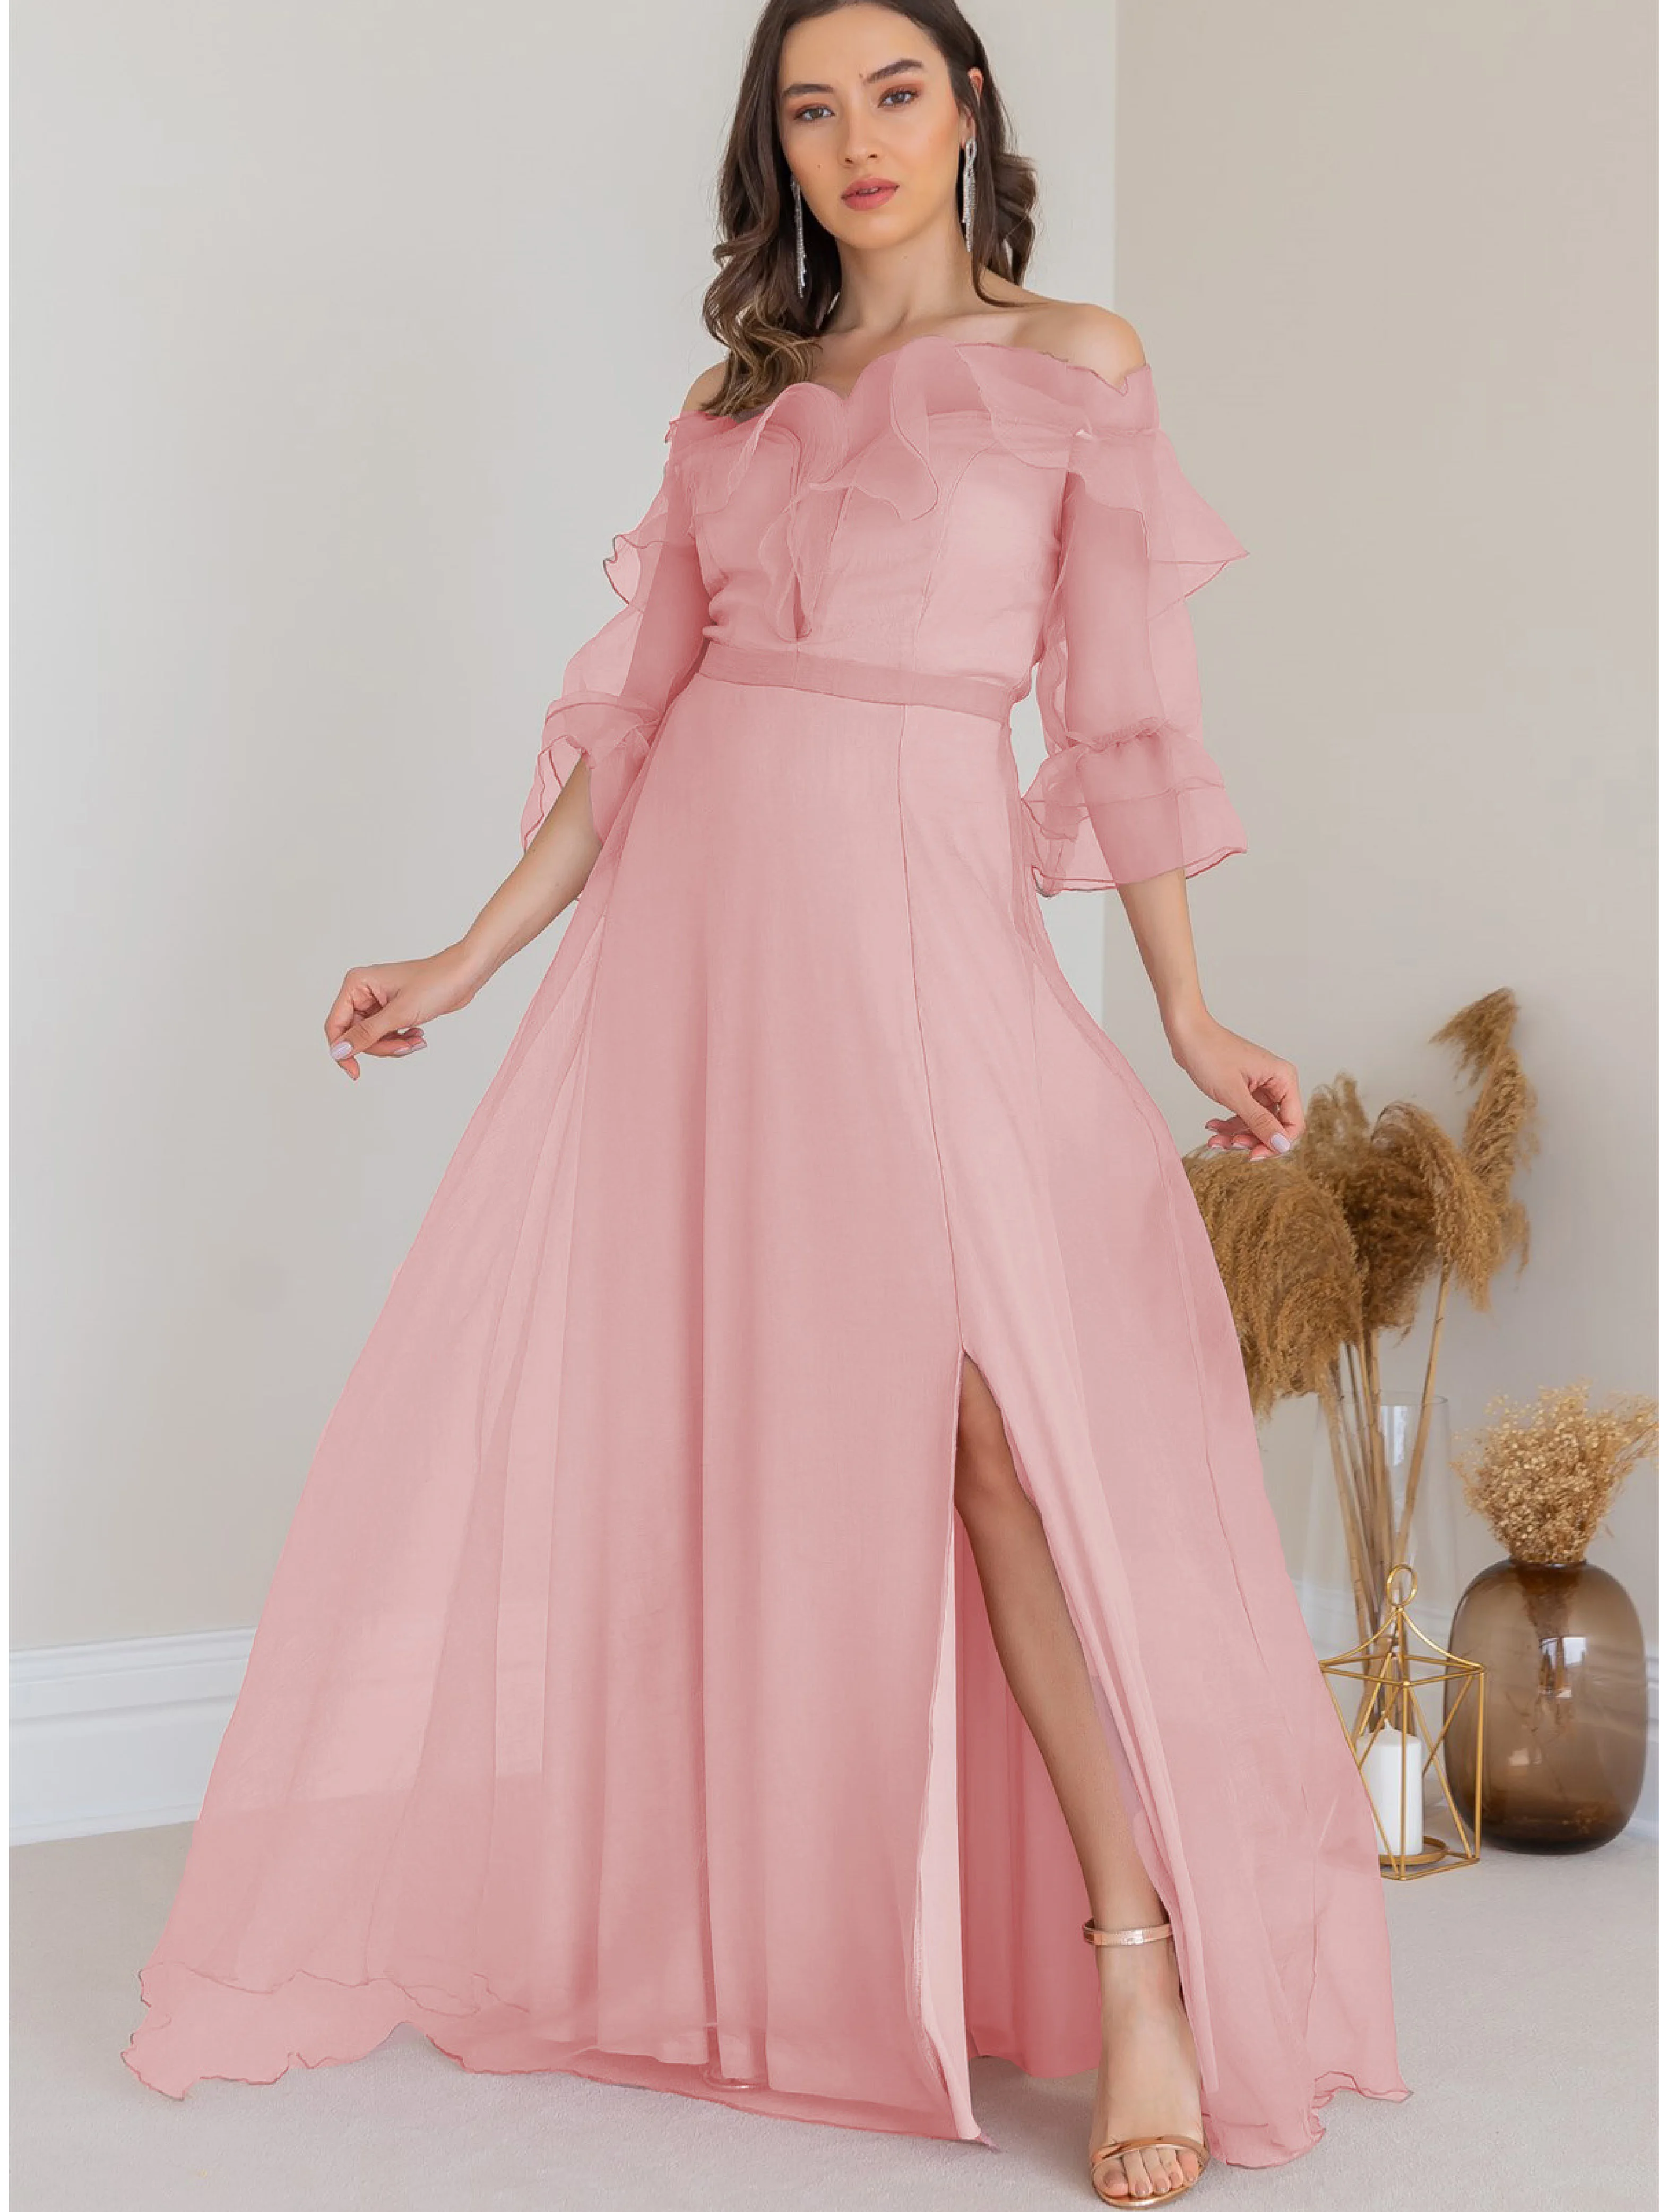 

Pink Off The Shoulder Ruffles Bridesmaid Dreses for Women Wedding Party Robes De Cocktail Prom Gown Elegant Vestidos De Fiesta